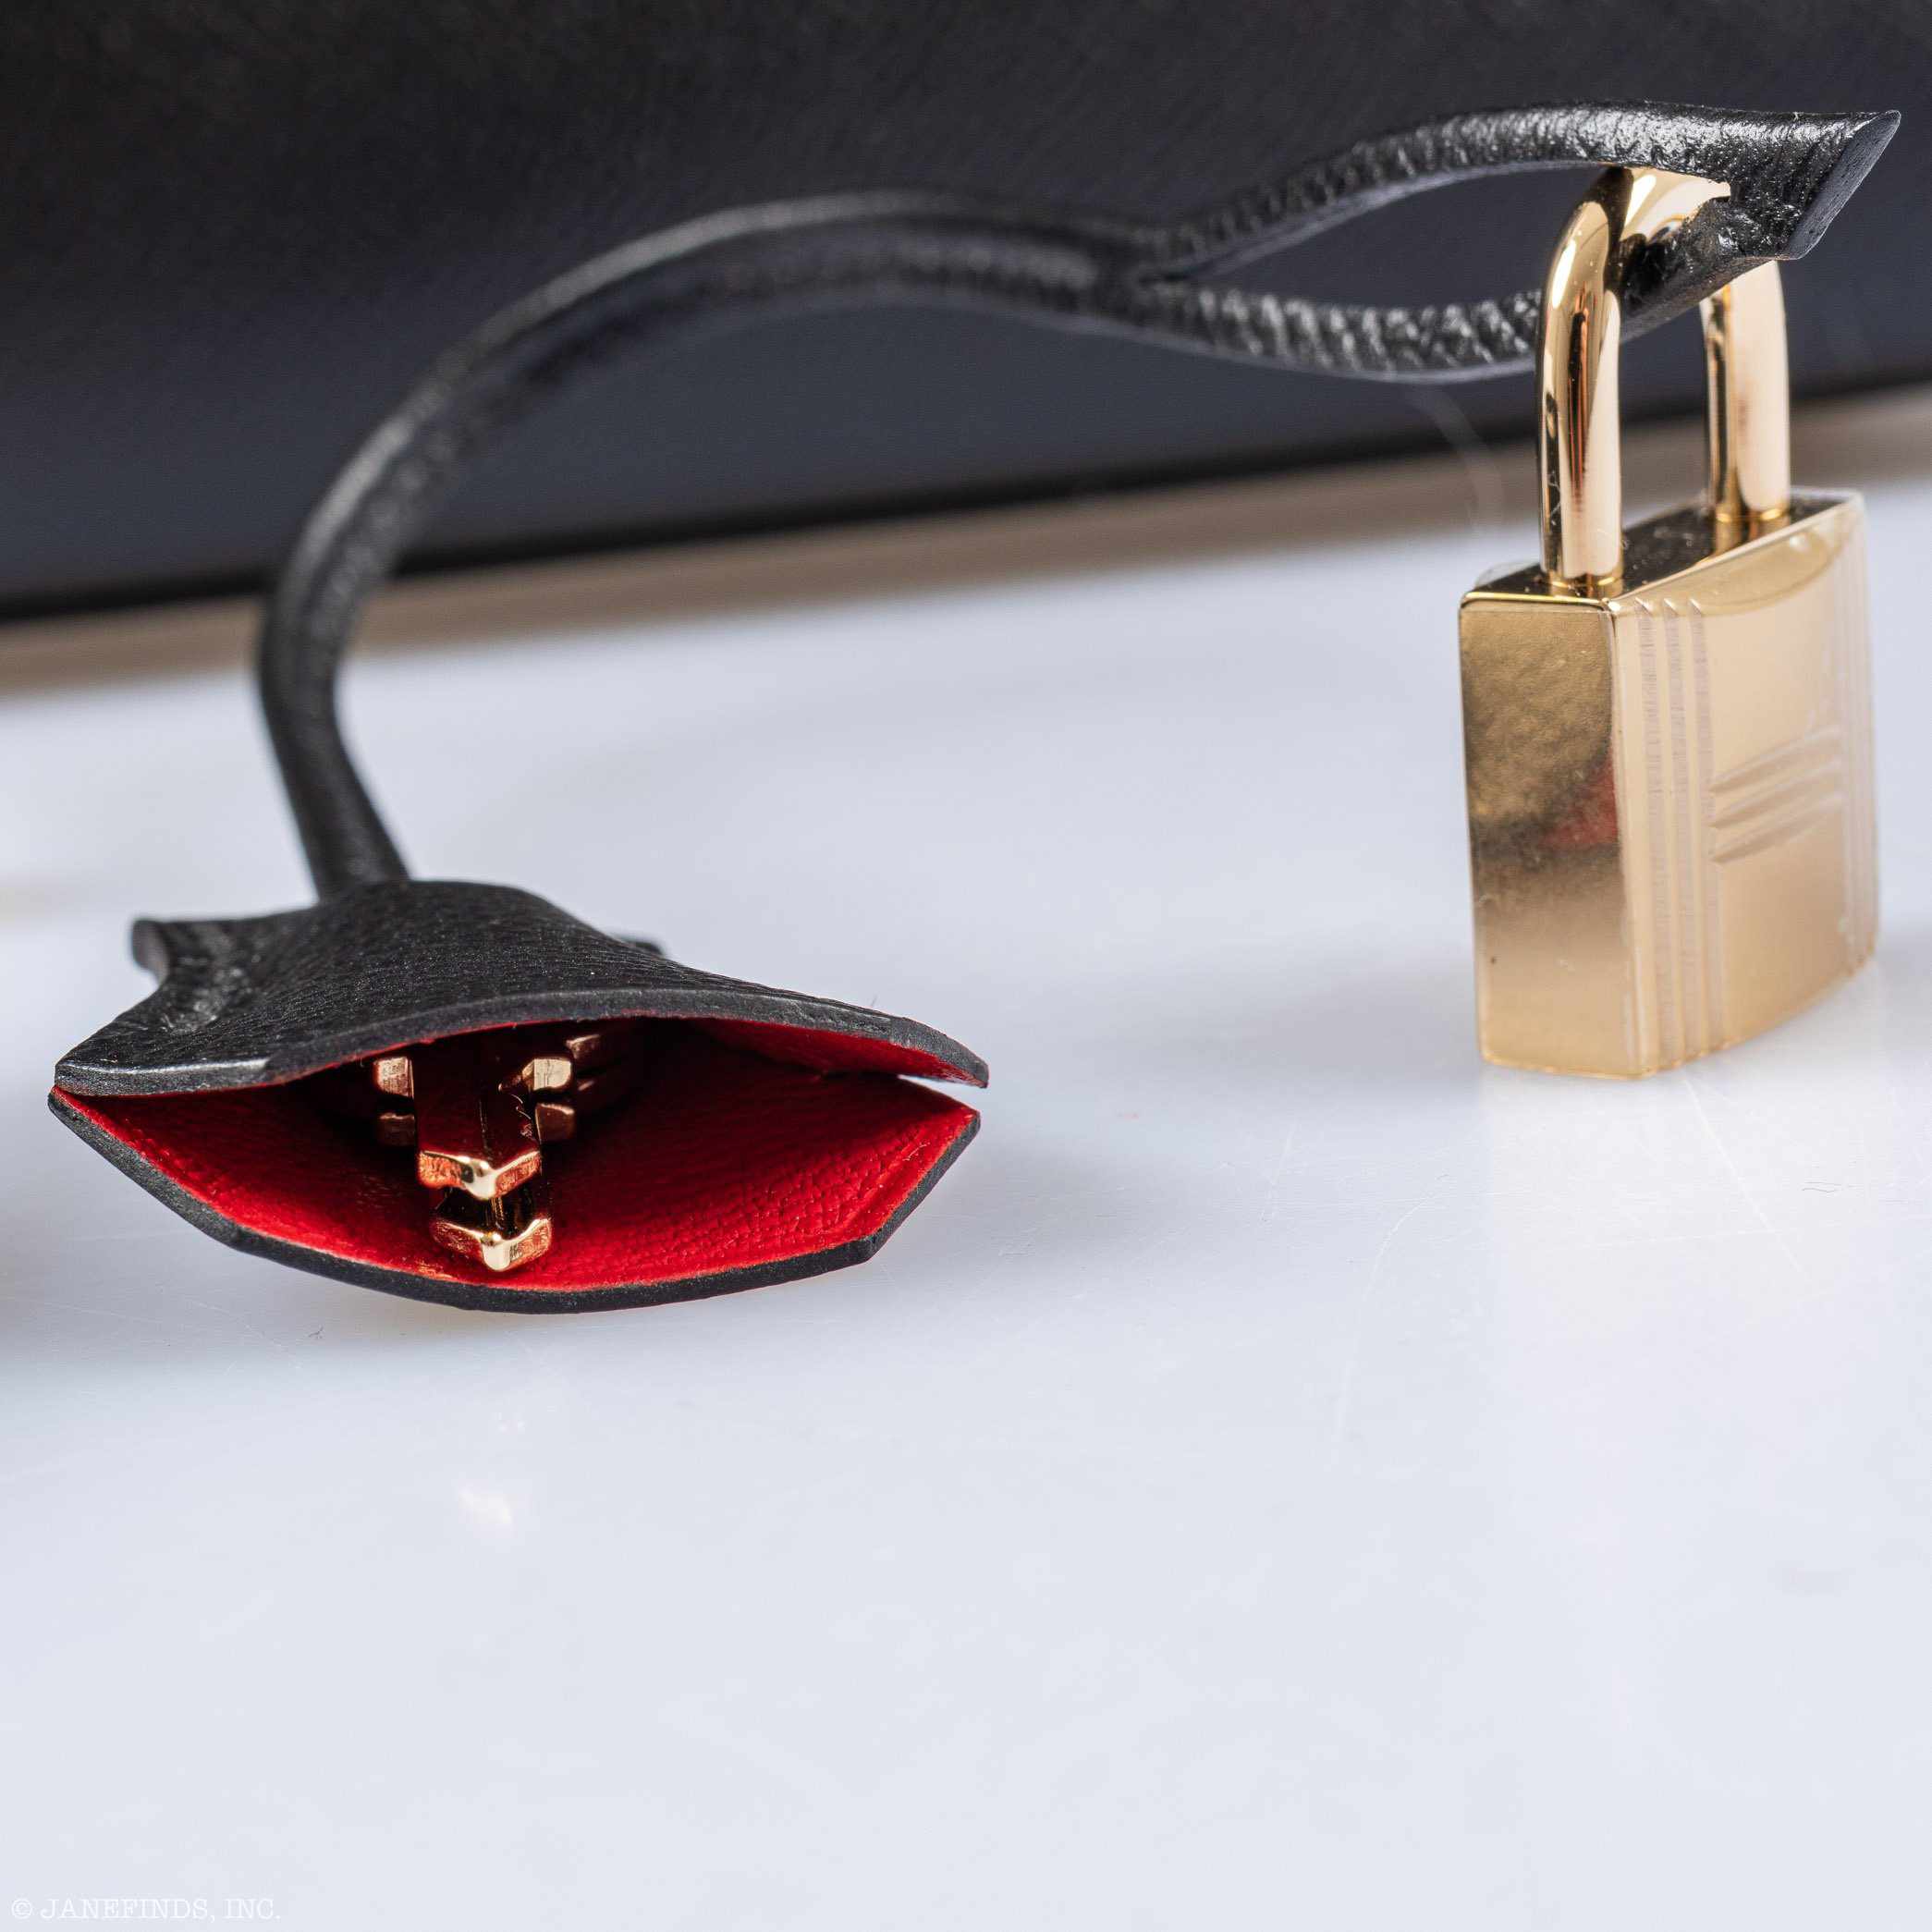 Hermès Kelly 28 Sellier HSS Black Epsom Vermillion Interior Rose Gold Hardware